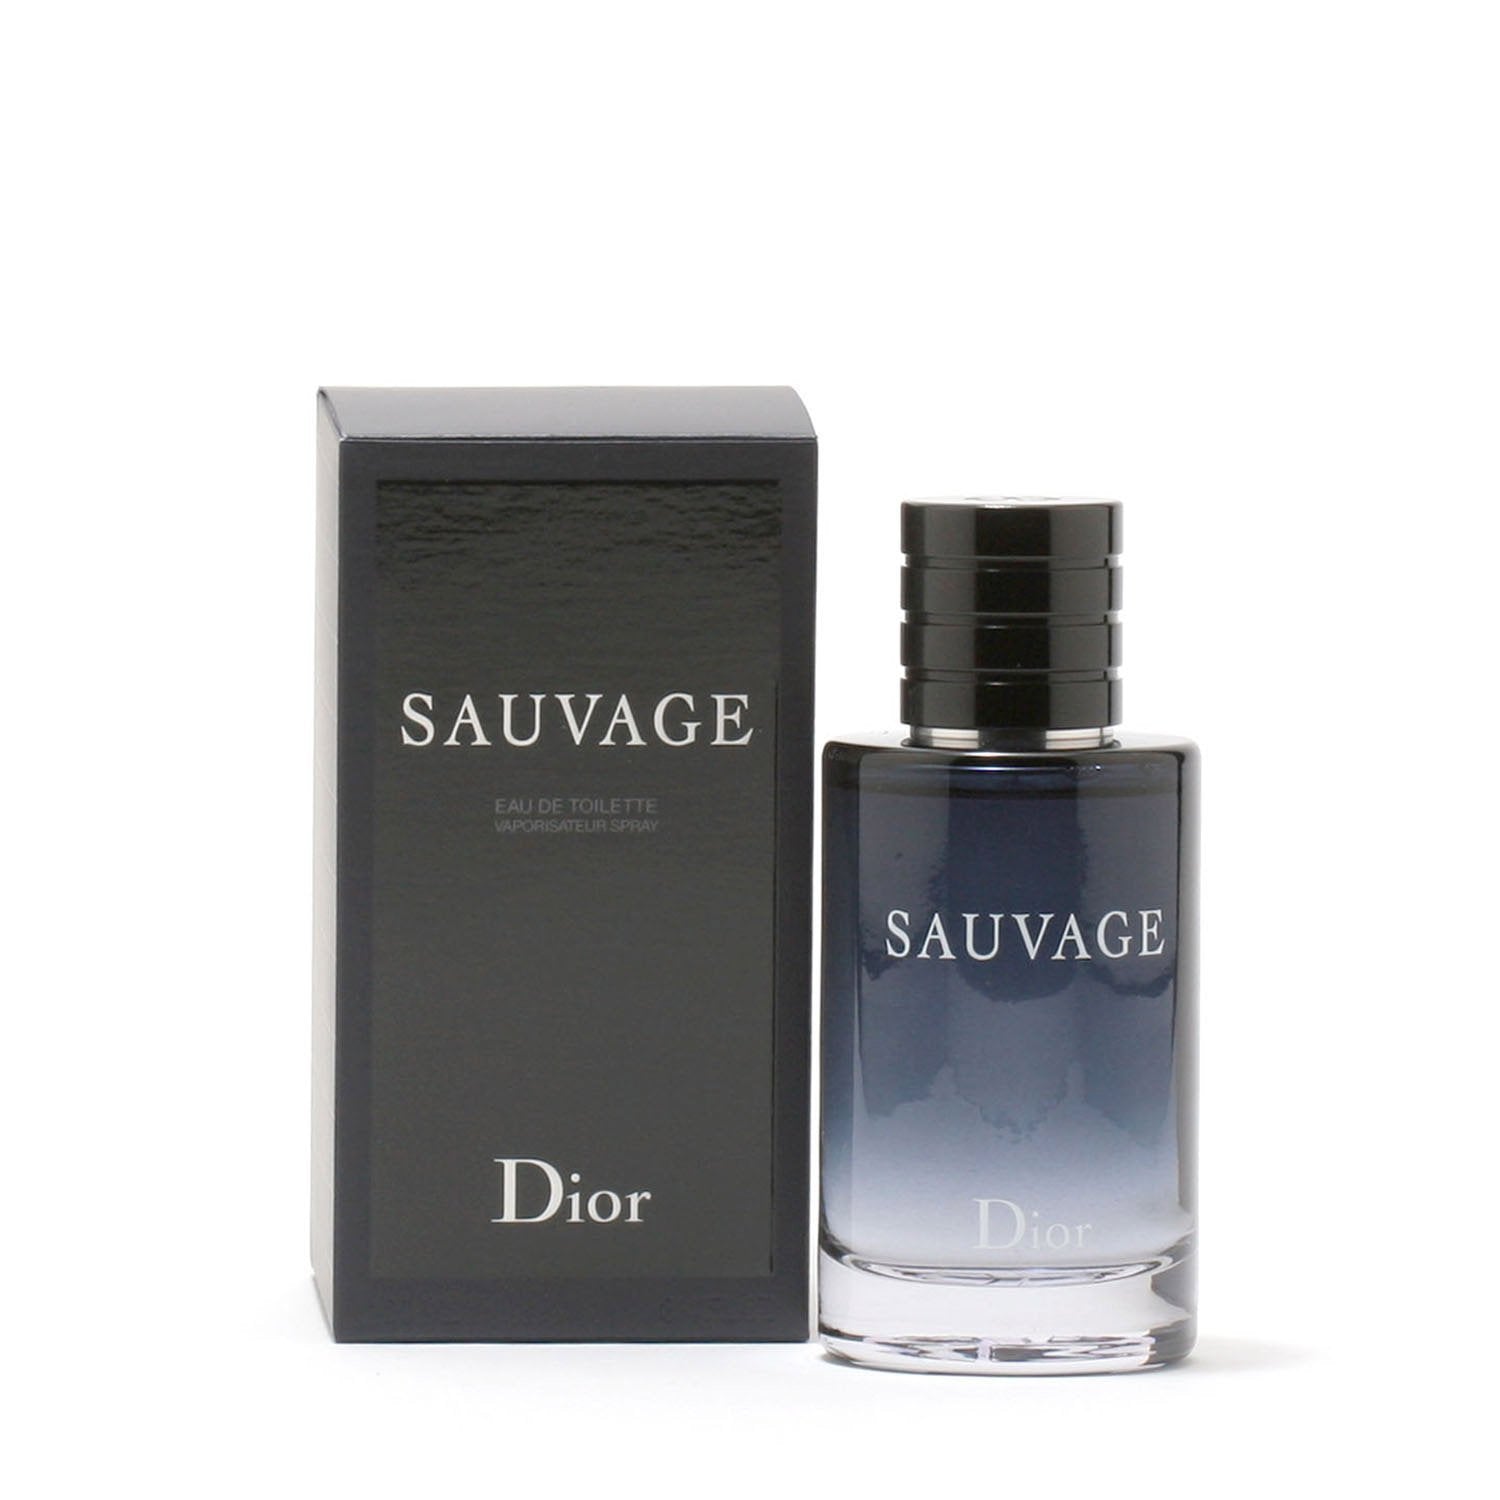 Amazoncom  Christian Dior Dior Homme Intense Eau de Parfum Spray for Men  34 Ounce  Colognes  Beauty  Personal Care